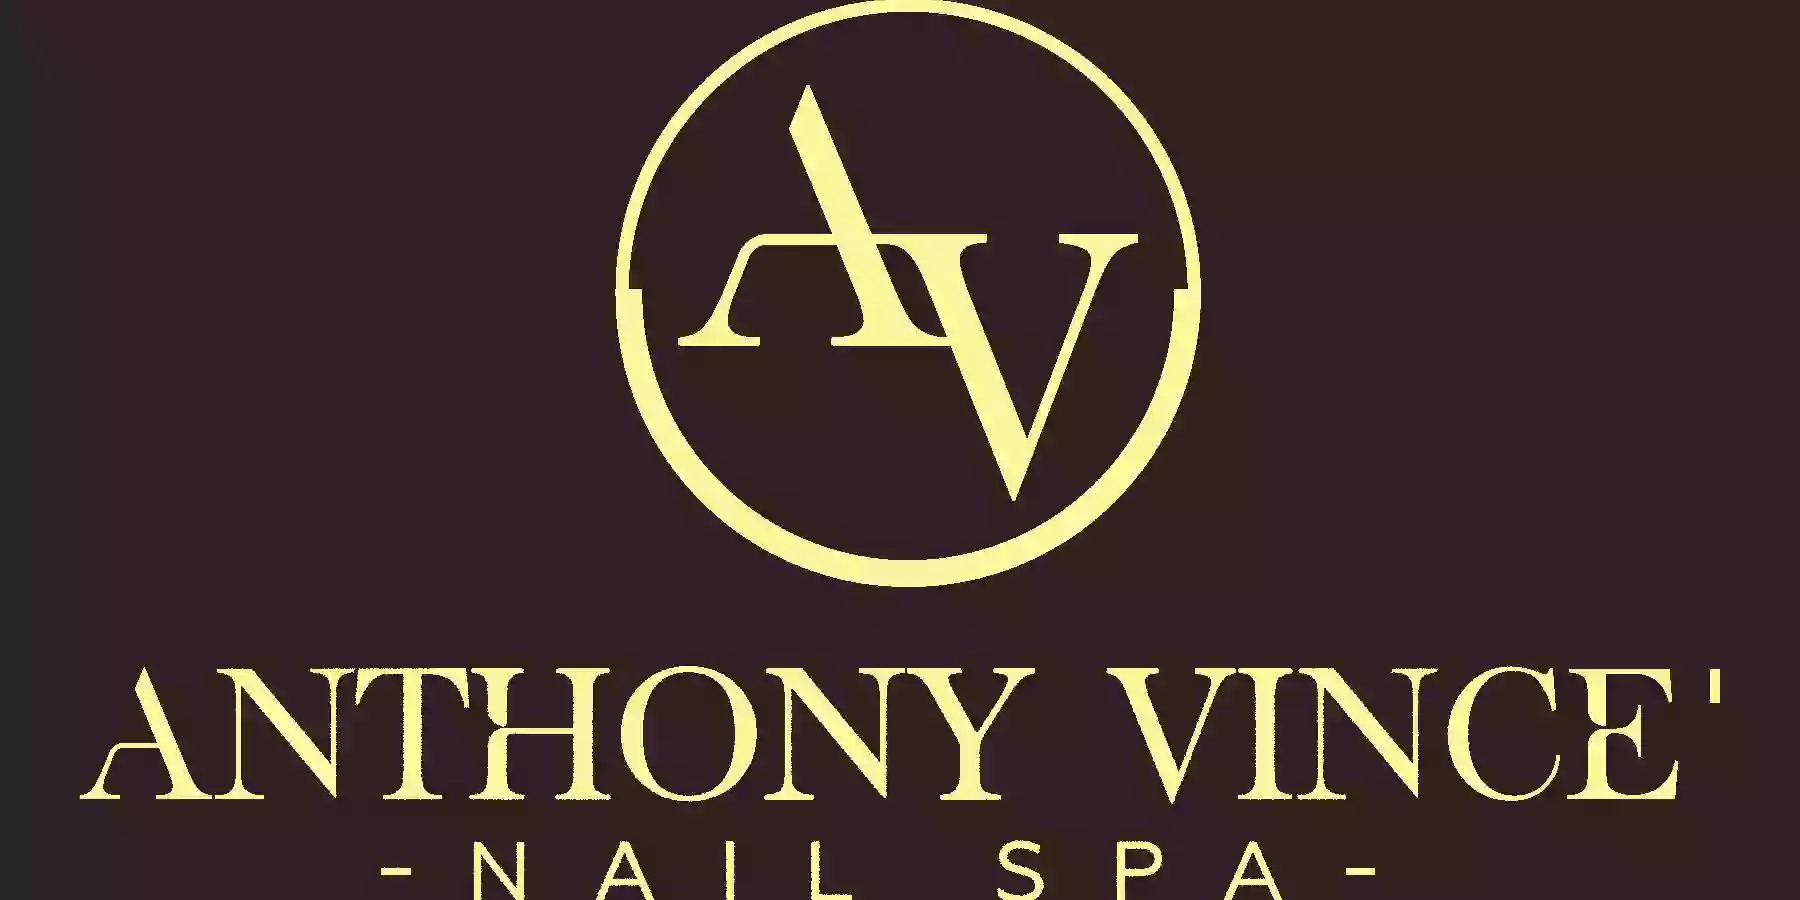 Anthony Vince’ Nail Spa